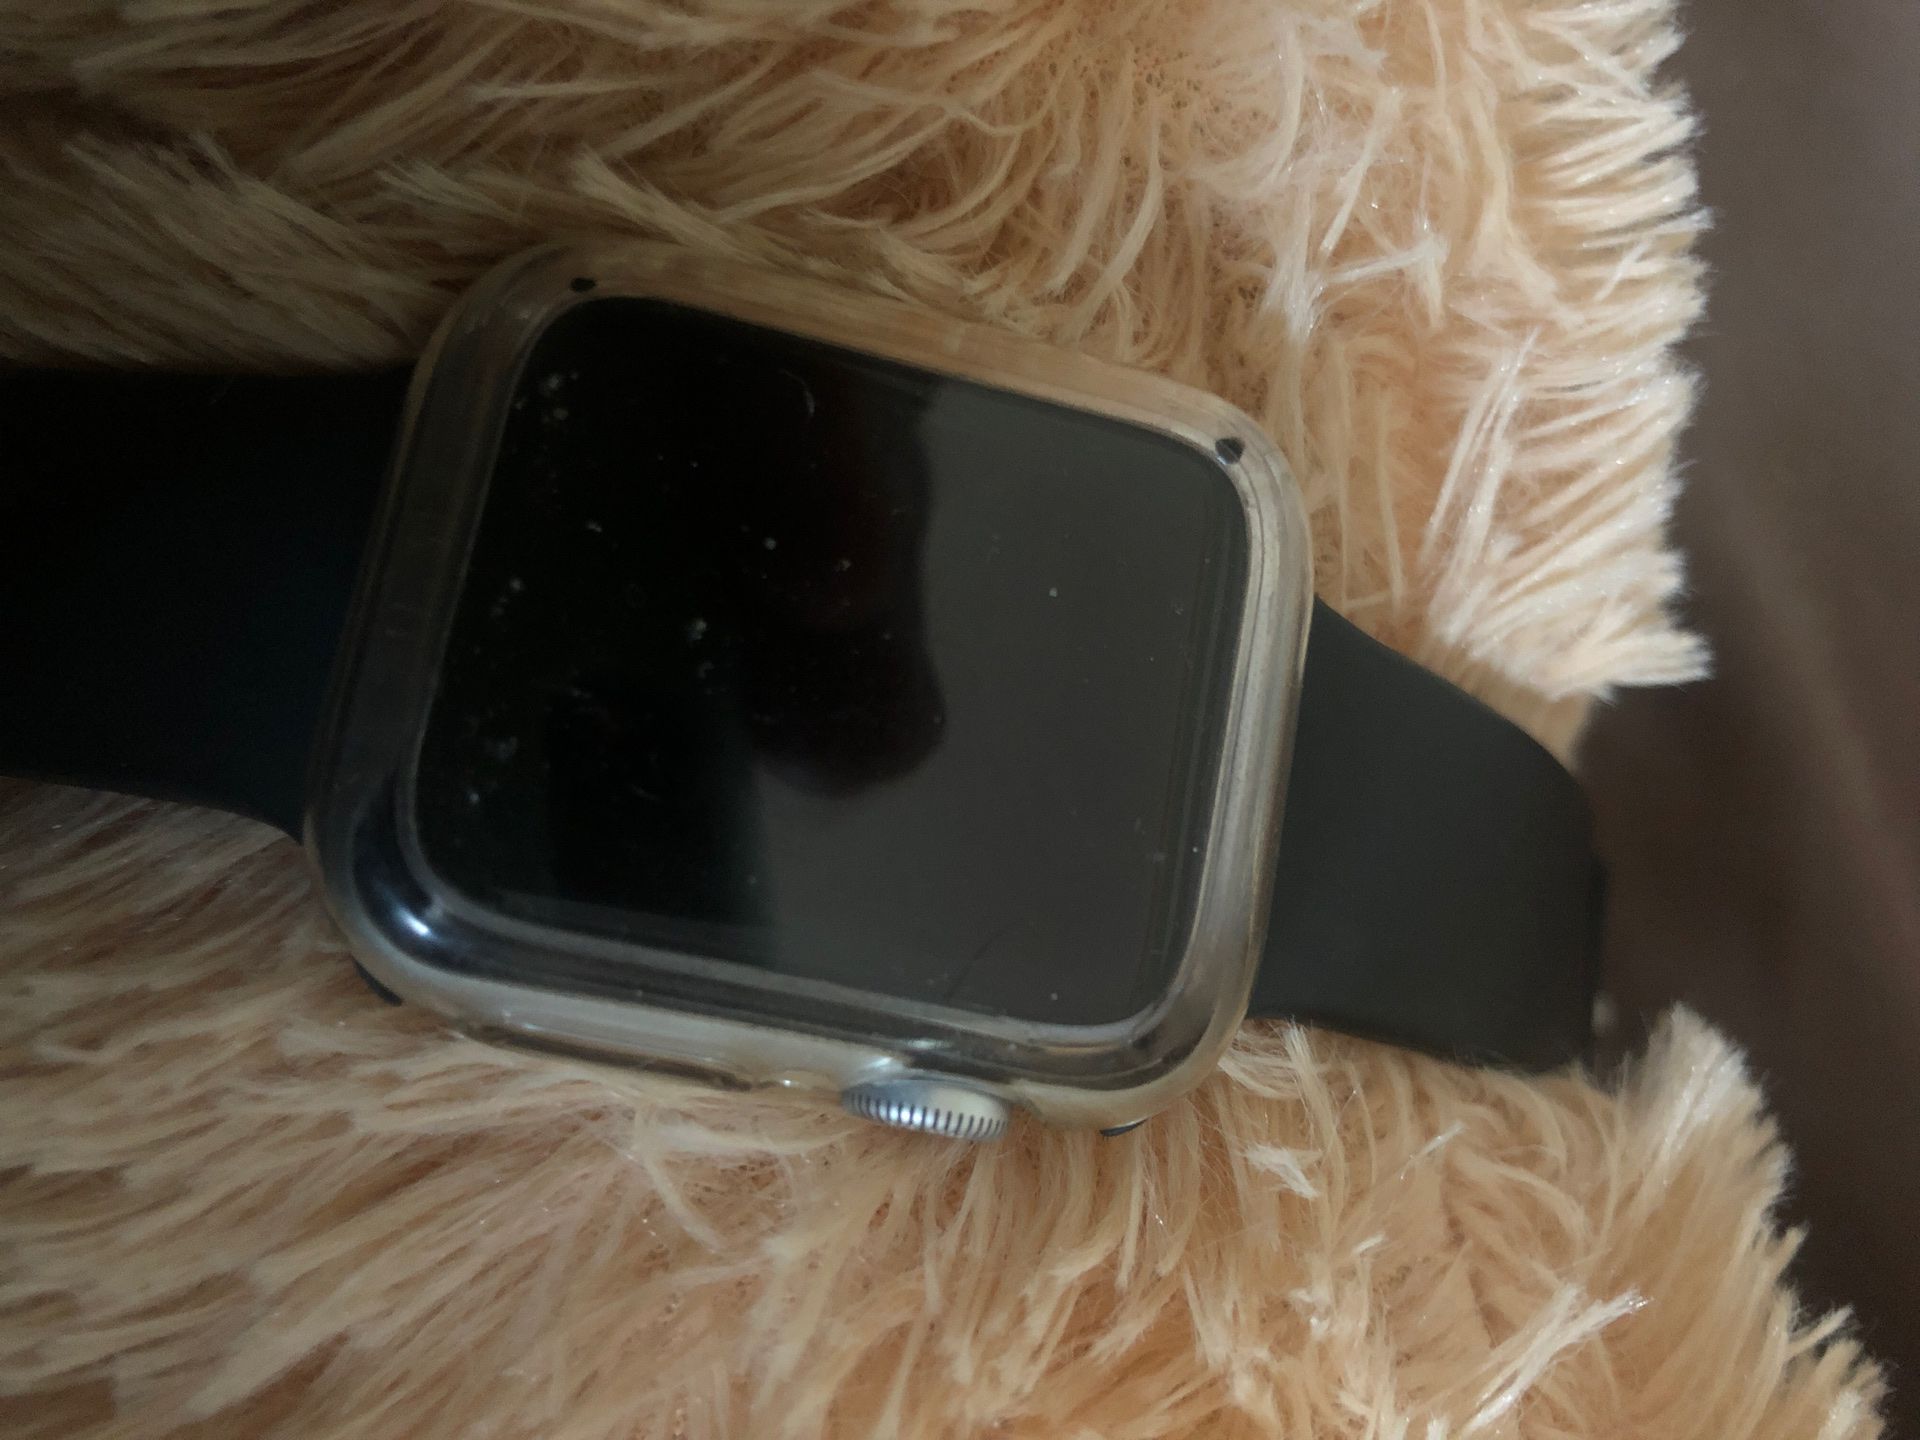 Apple Watch series 3 ‘38mm